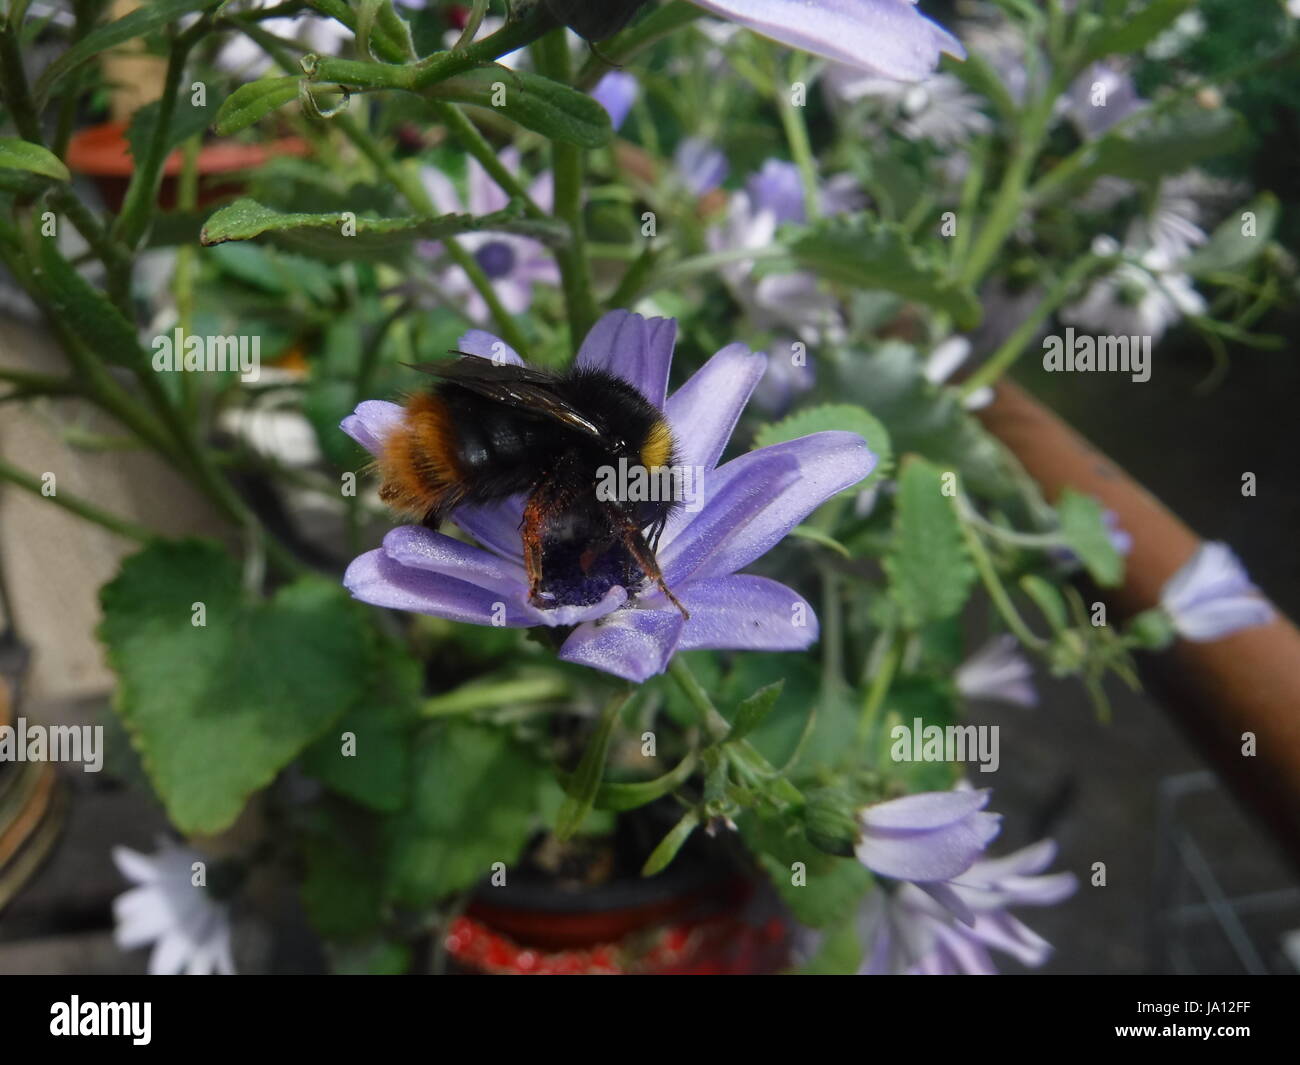 Bumblebee on a purple flower Stock Photo